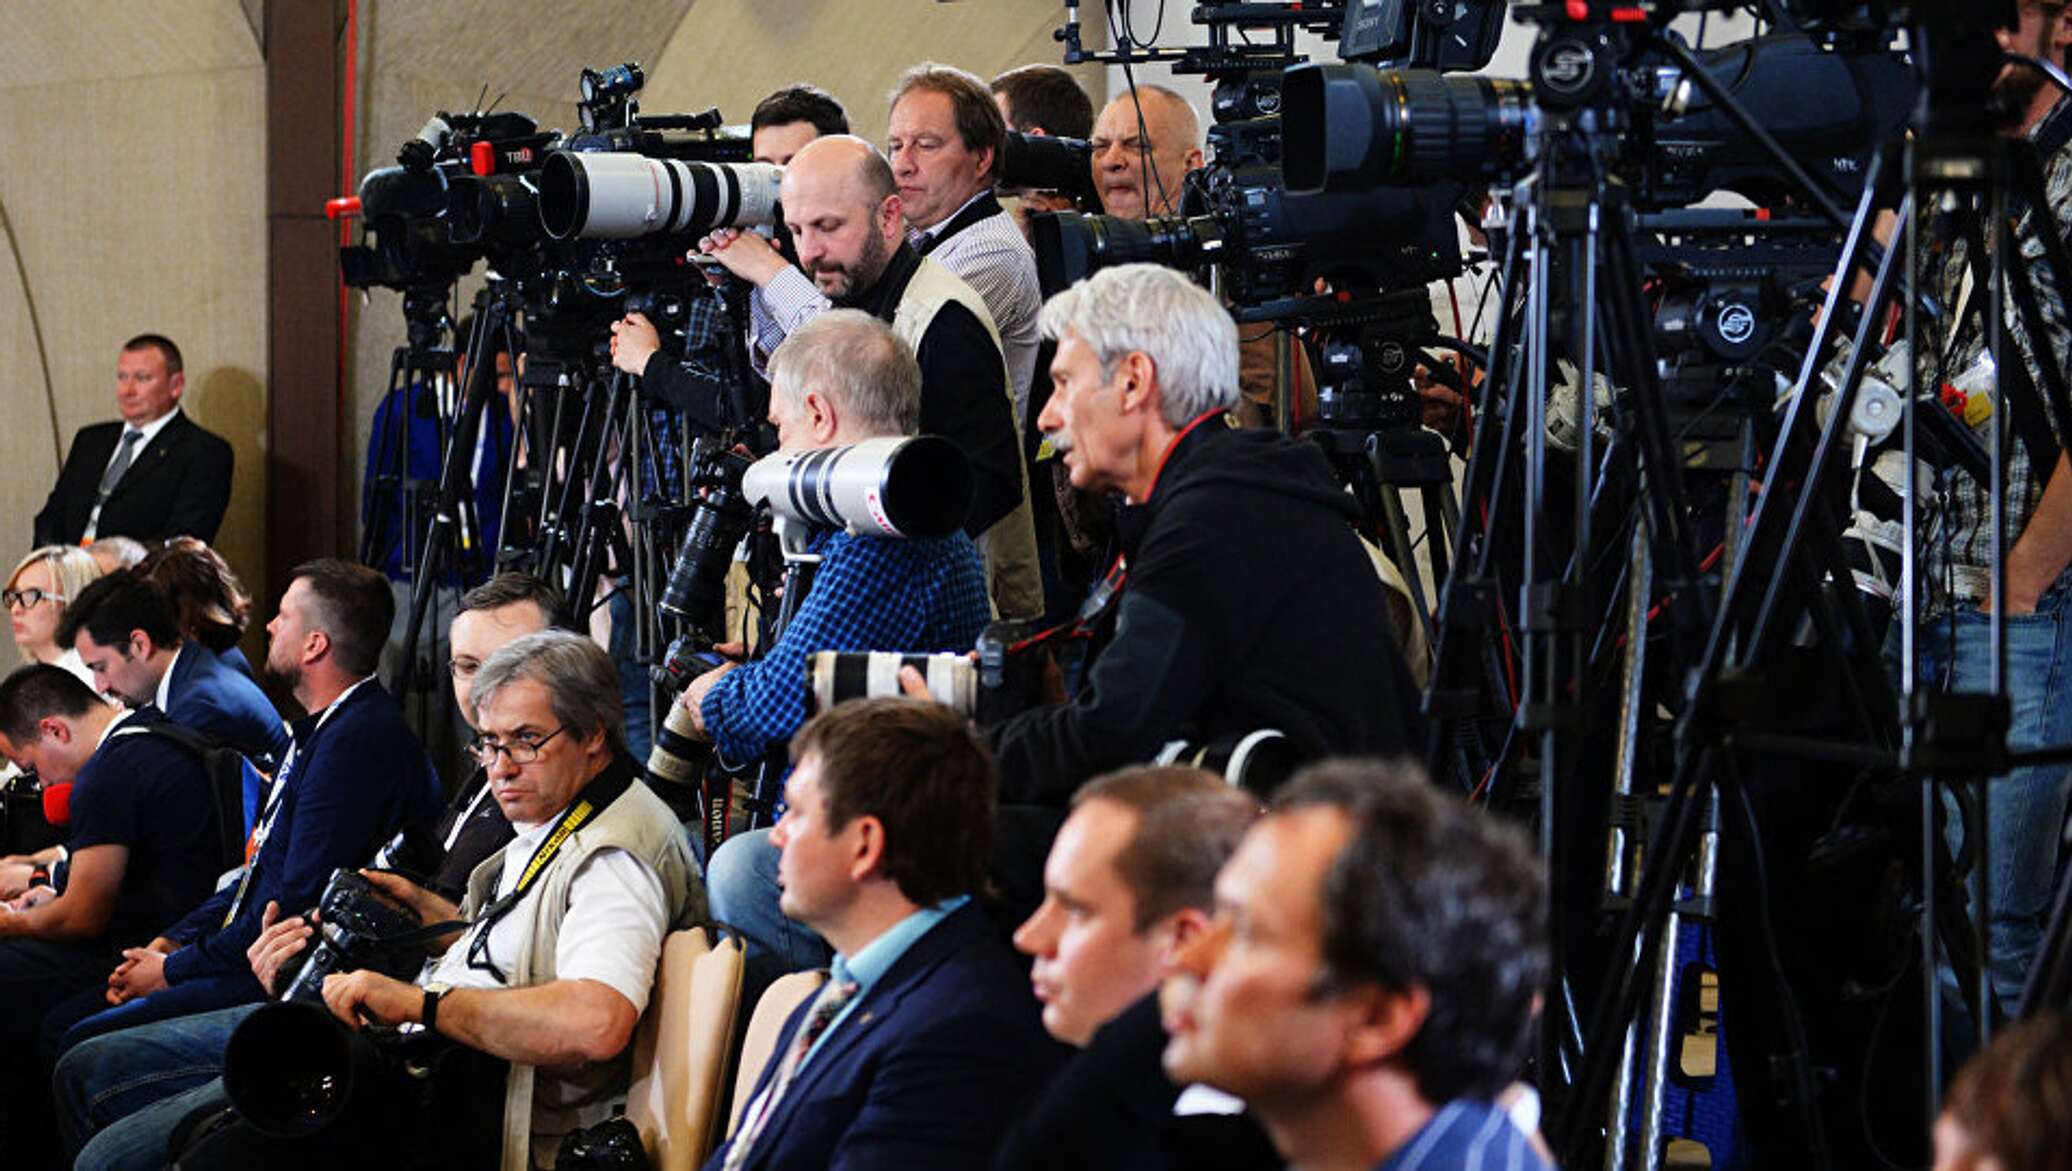 Сми узбекистана. Пресс-конференция журналисты. Журналисты на конференции. Российская журналистика. Репортер на пресс конференции.